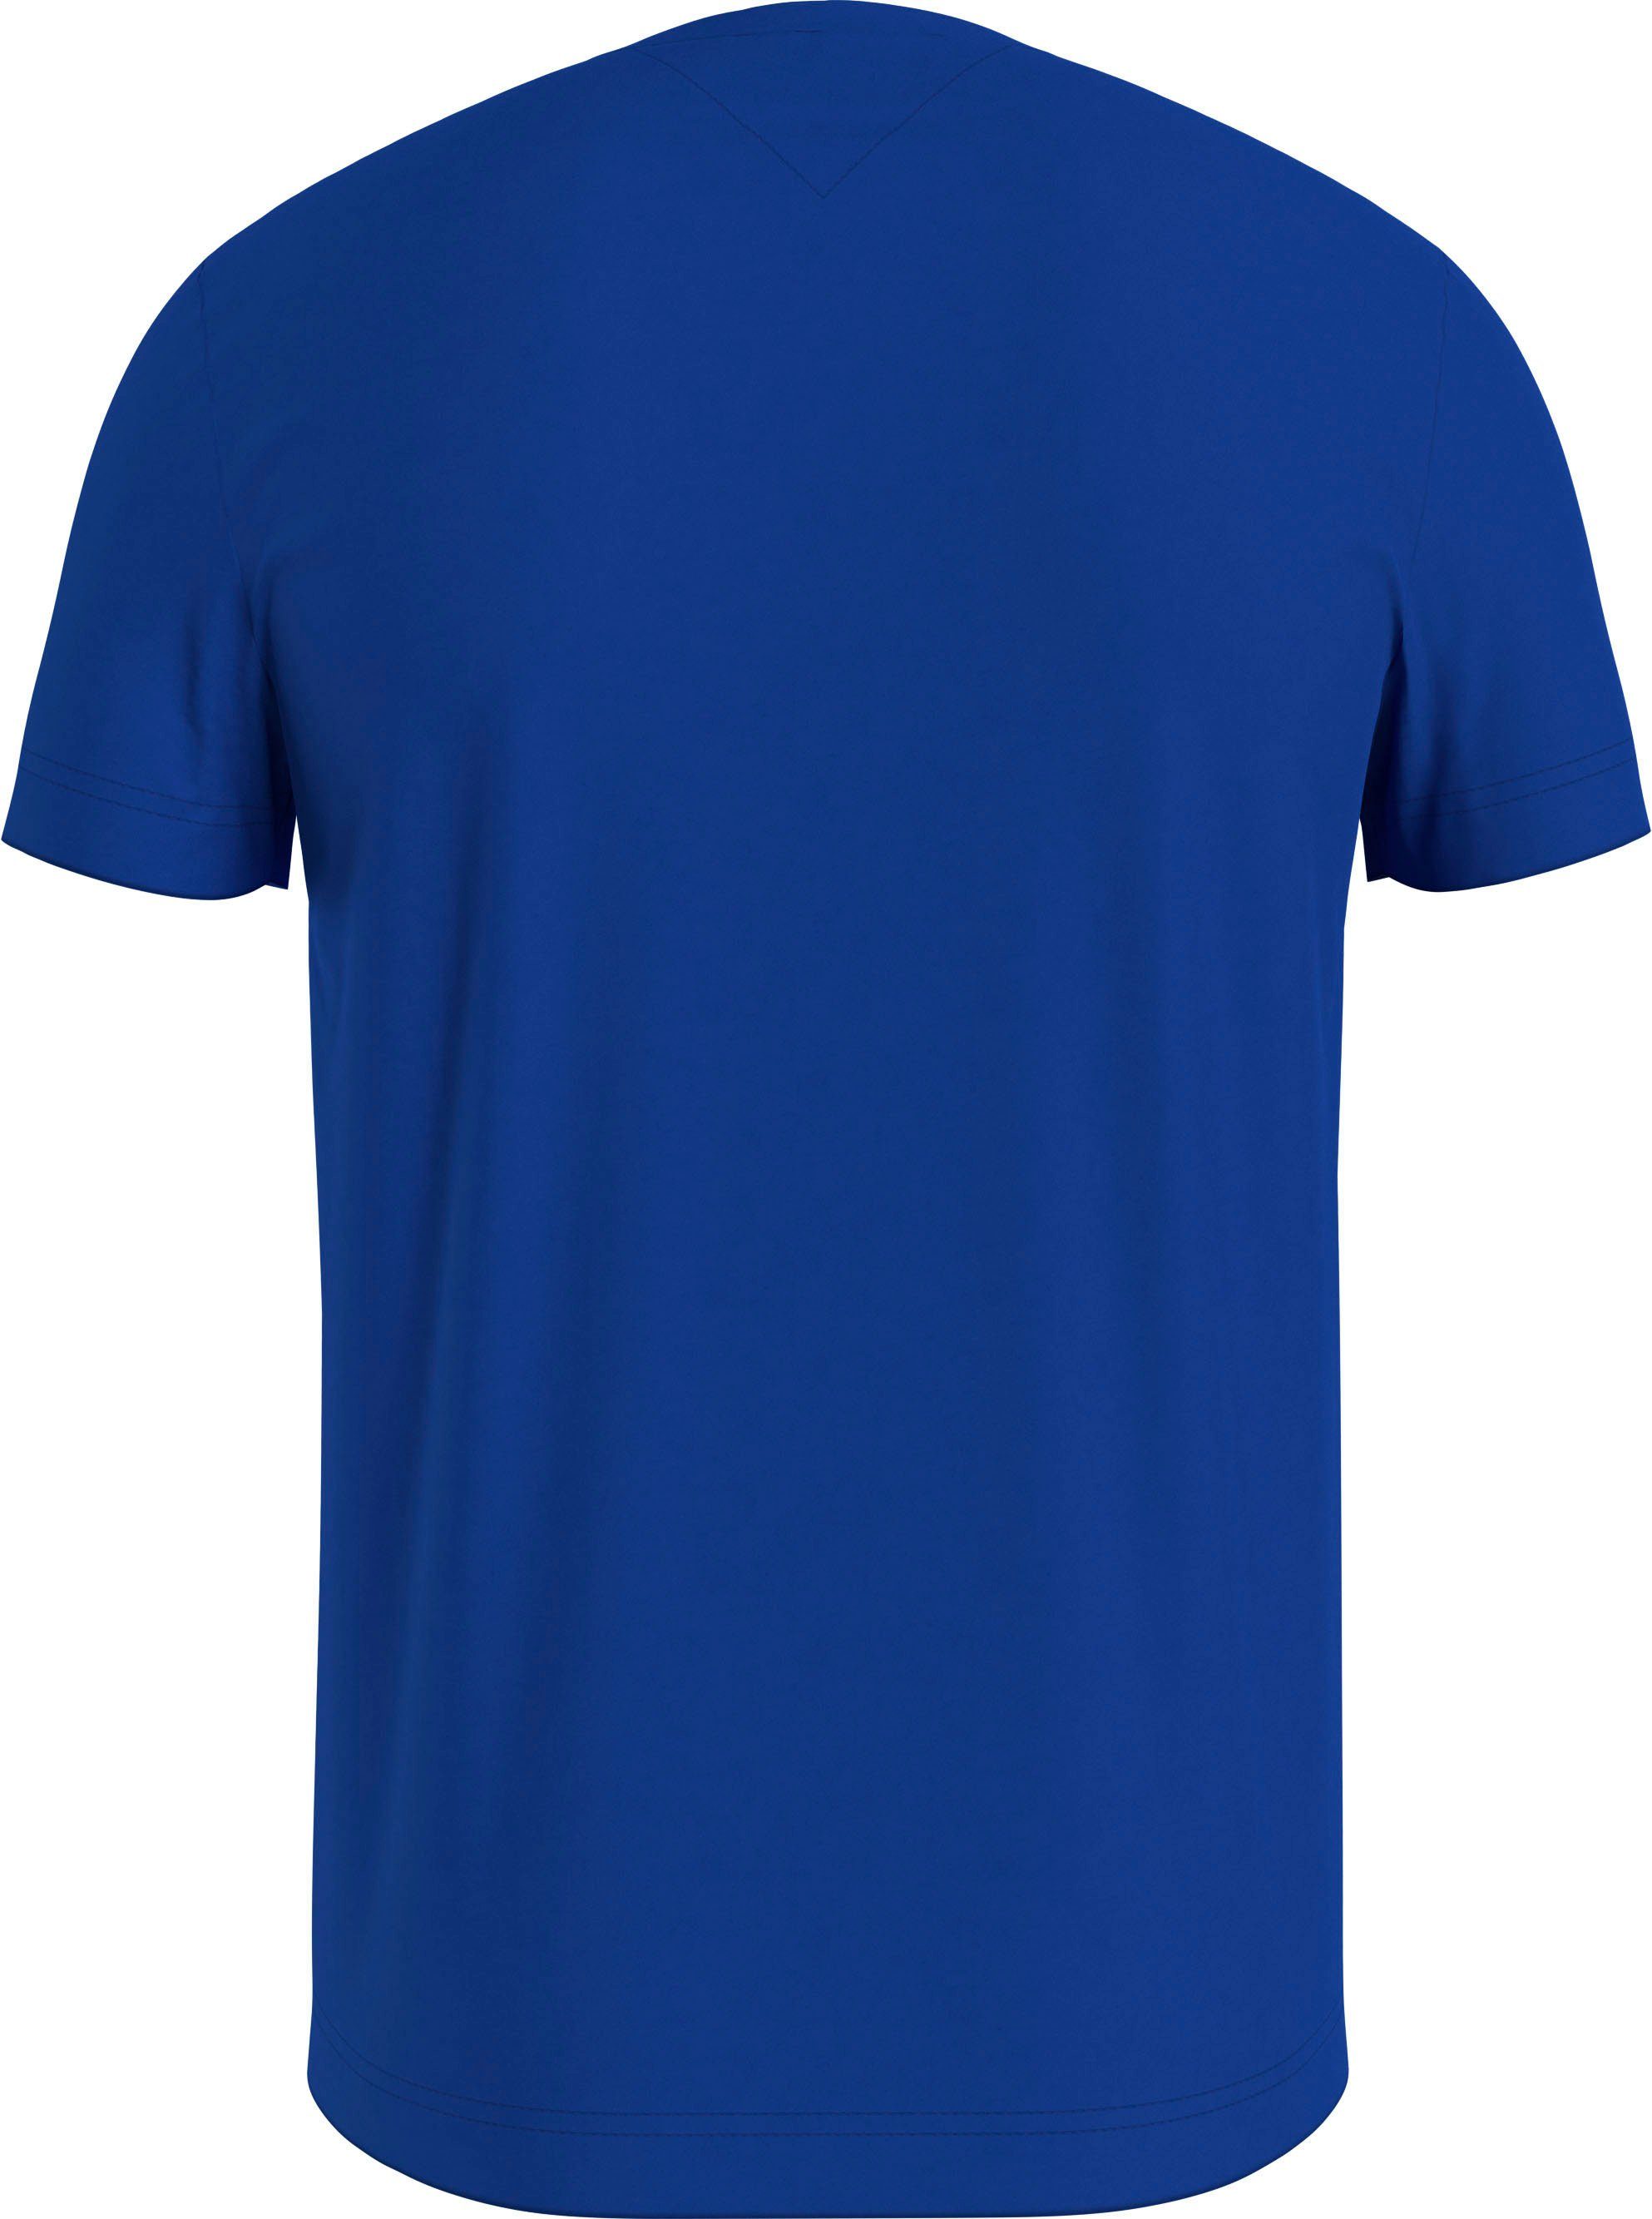 Tommy Hilfiger T-Shirt TOMMY LOGO TEE Blue Ultra